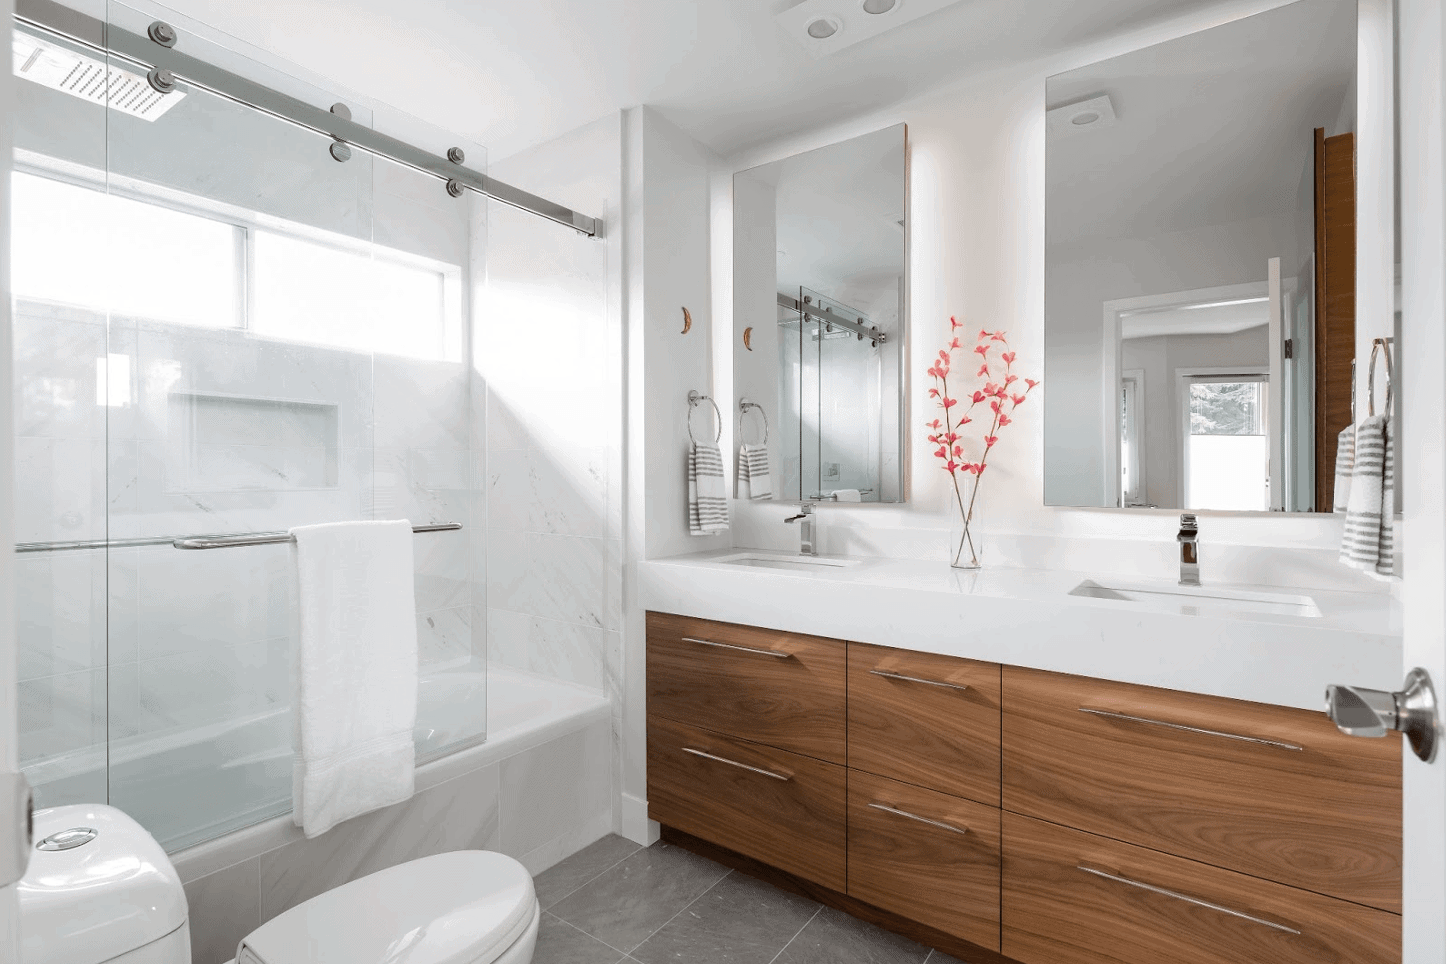 bright white bathoom minimal renovation design